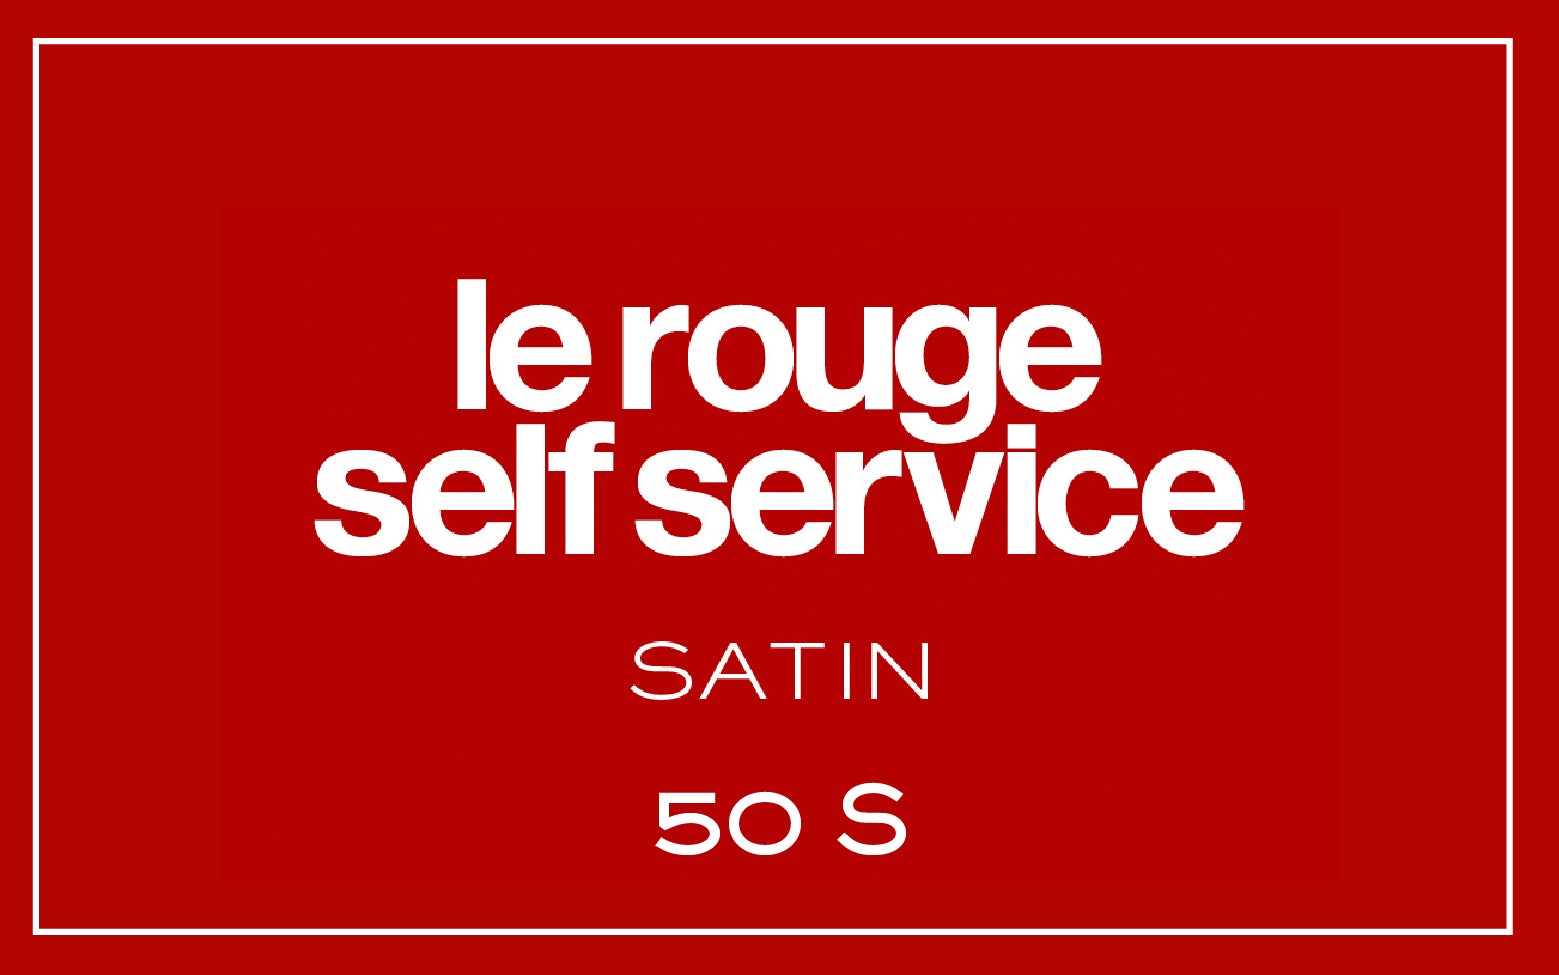 La bouche rouge Le Rouge Self Service Satin lipstick swatch with text